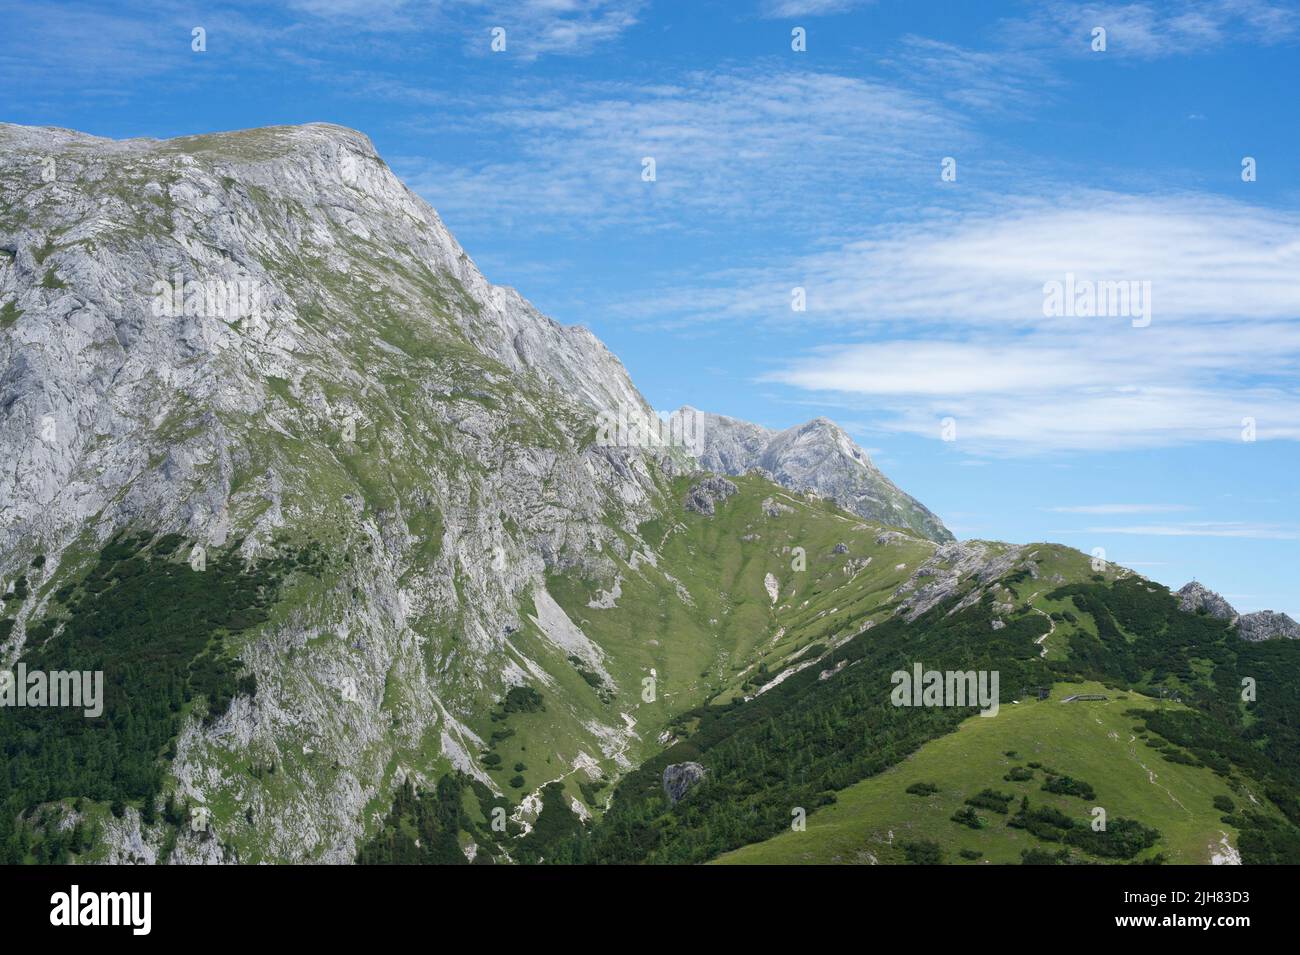 Hoher Göll and Hohes Brett Mountains near Mount Jenner, Bavarian Alps, Berchtesgadener Alpen, Berchtesgaden Alps, Germany Stock Photo